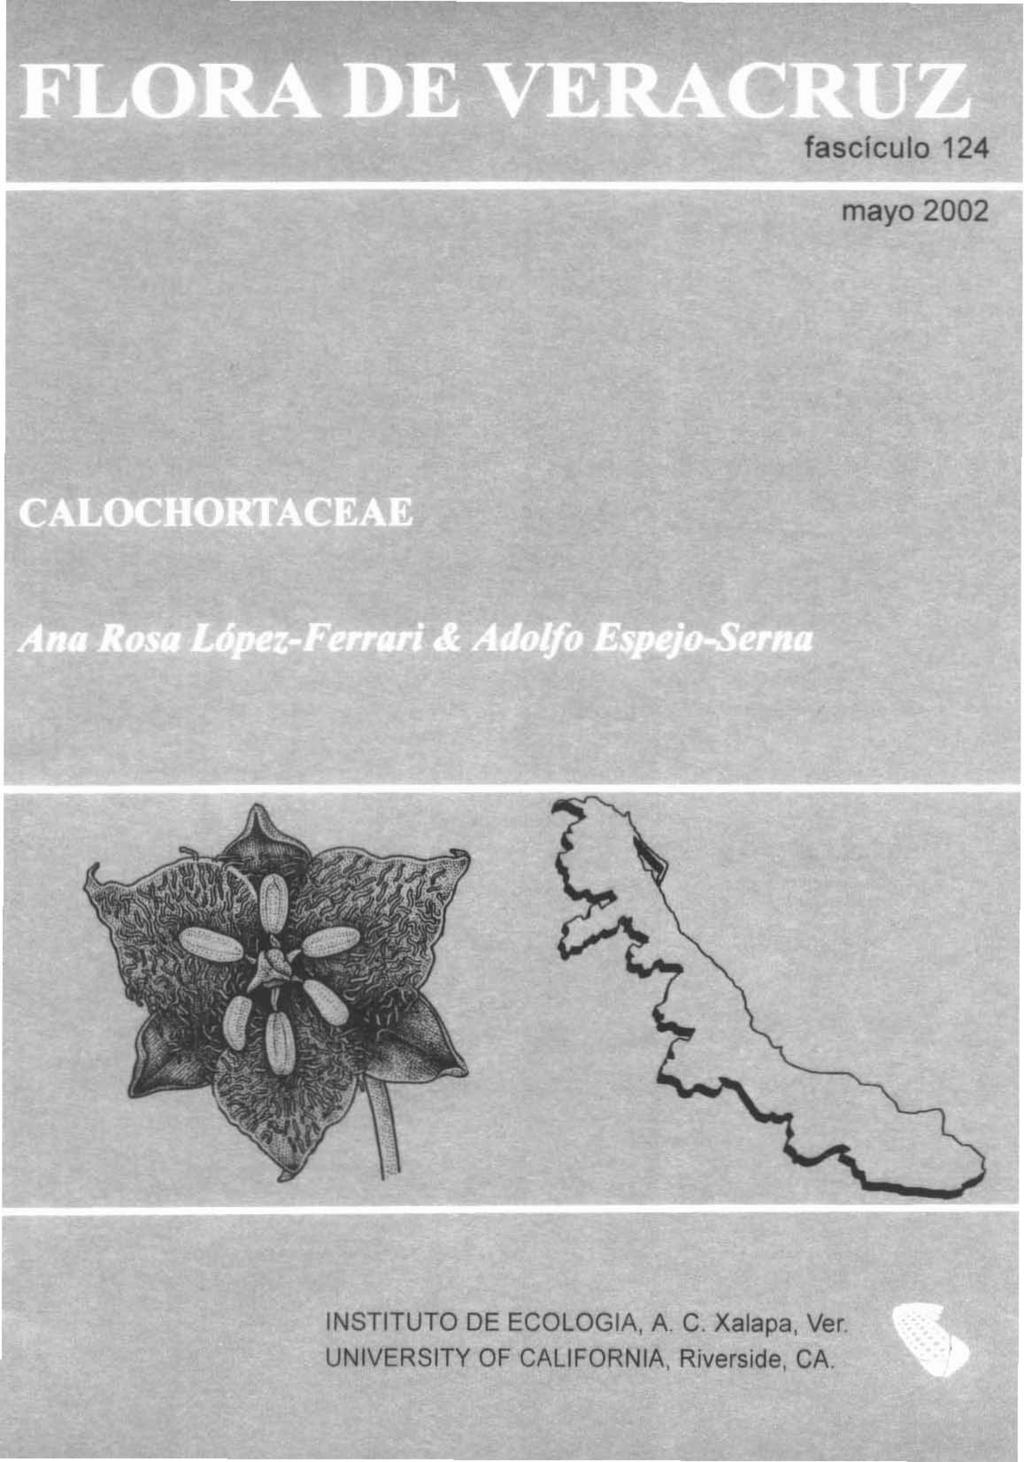 fascículo 124 mayo 2002 INSTITUTO DE ECOLOGIA, A. C.